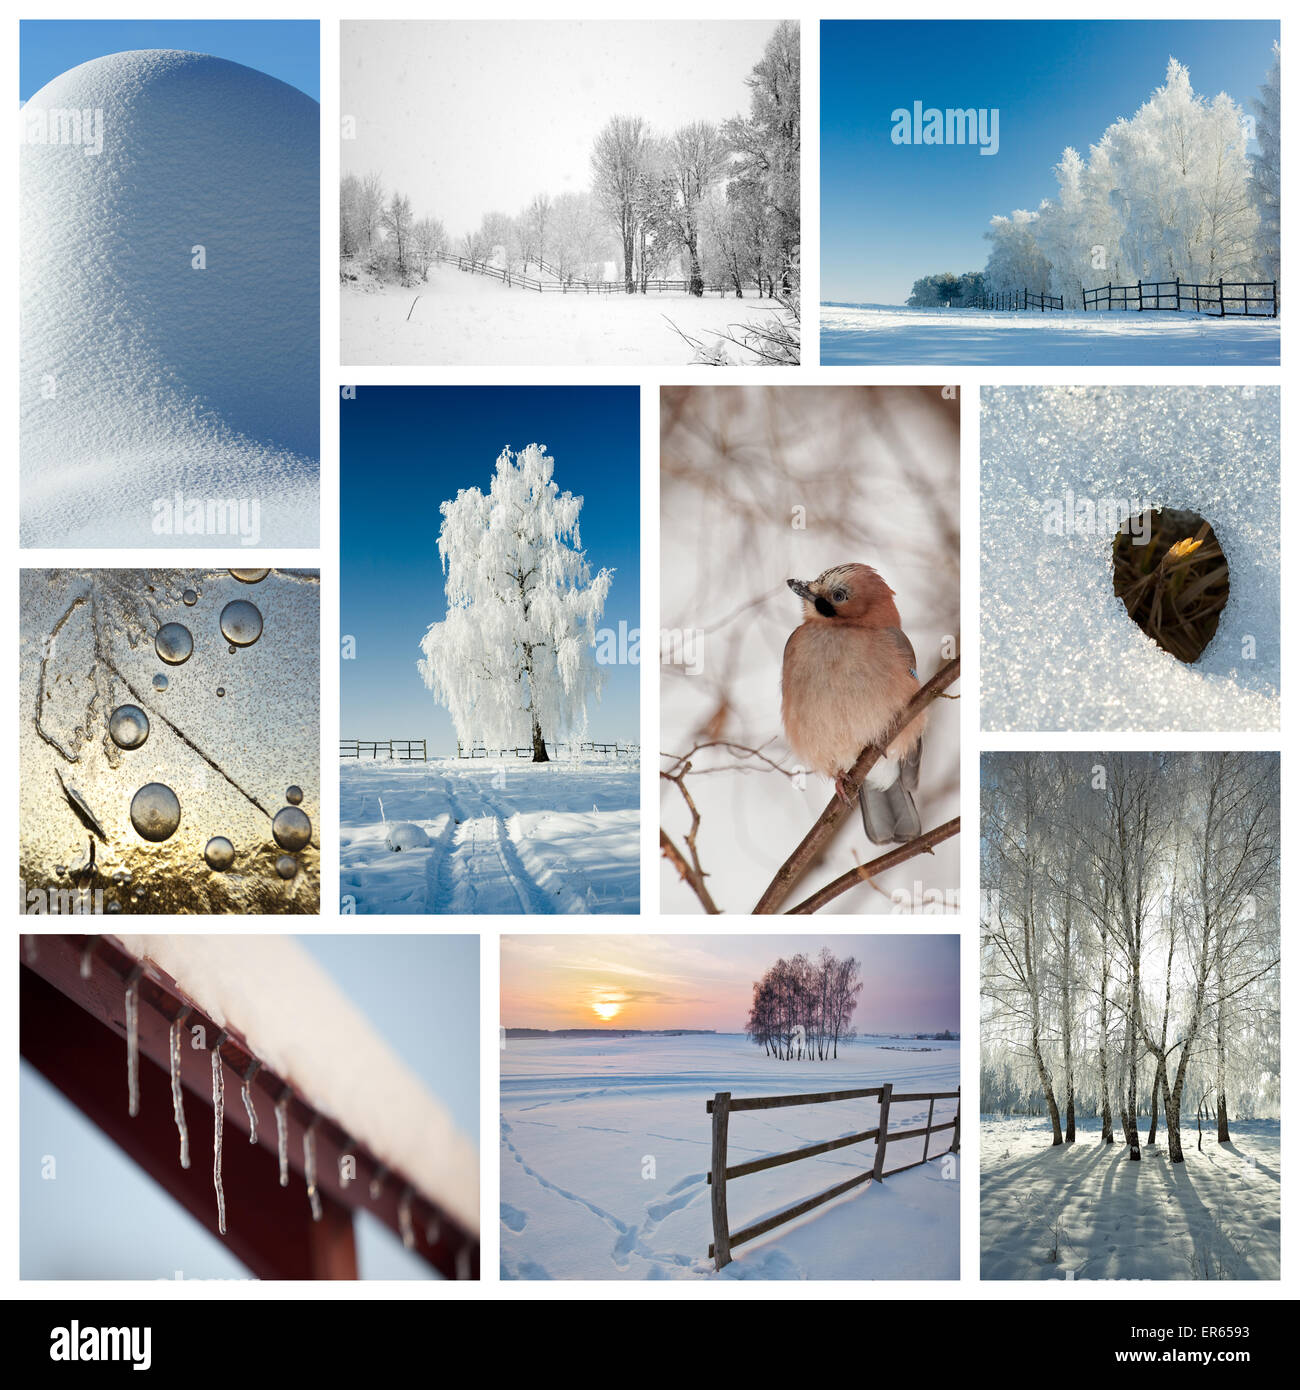 Winter collage representing various season-related nature scenics Stock Photo